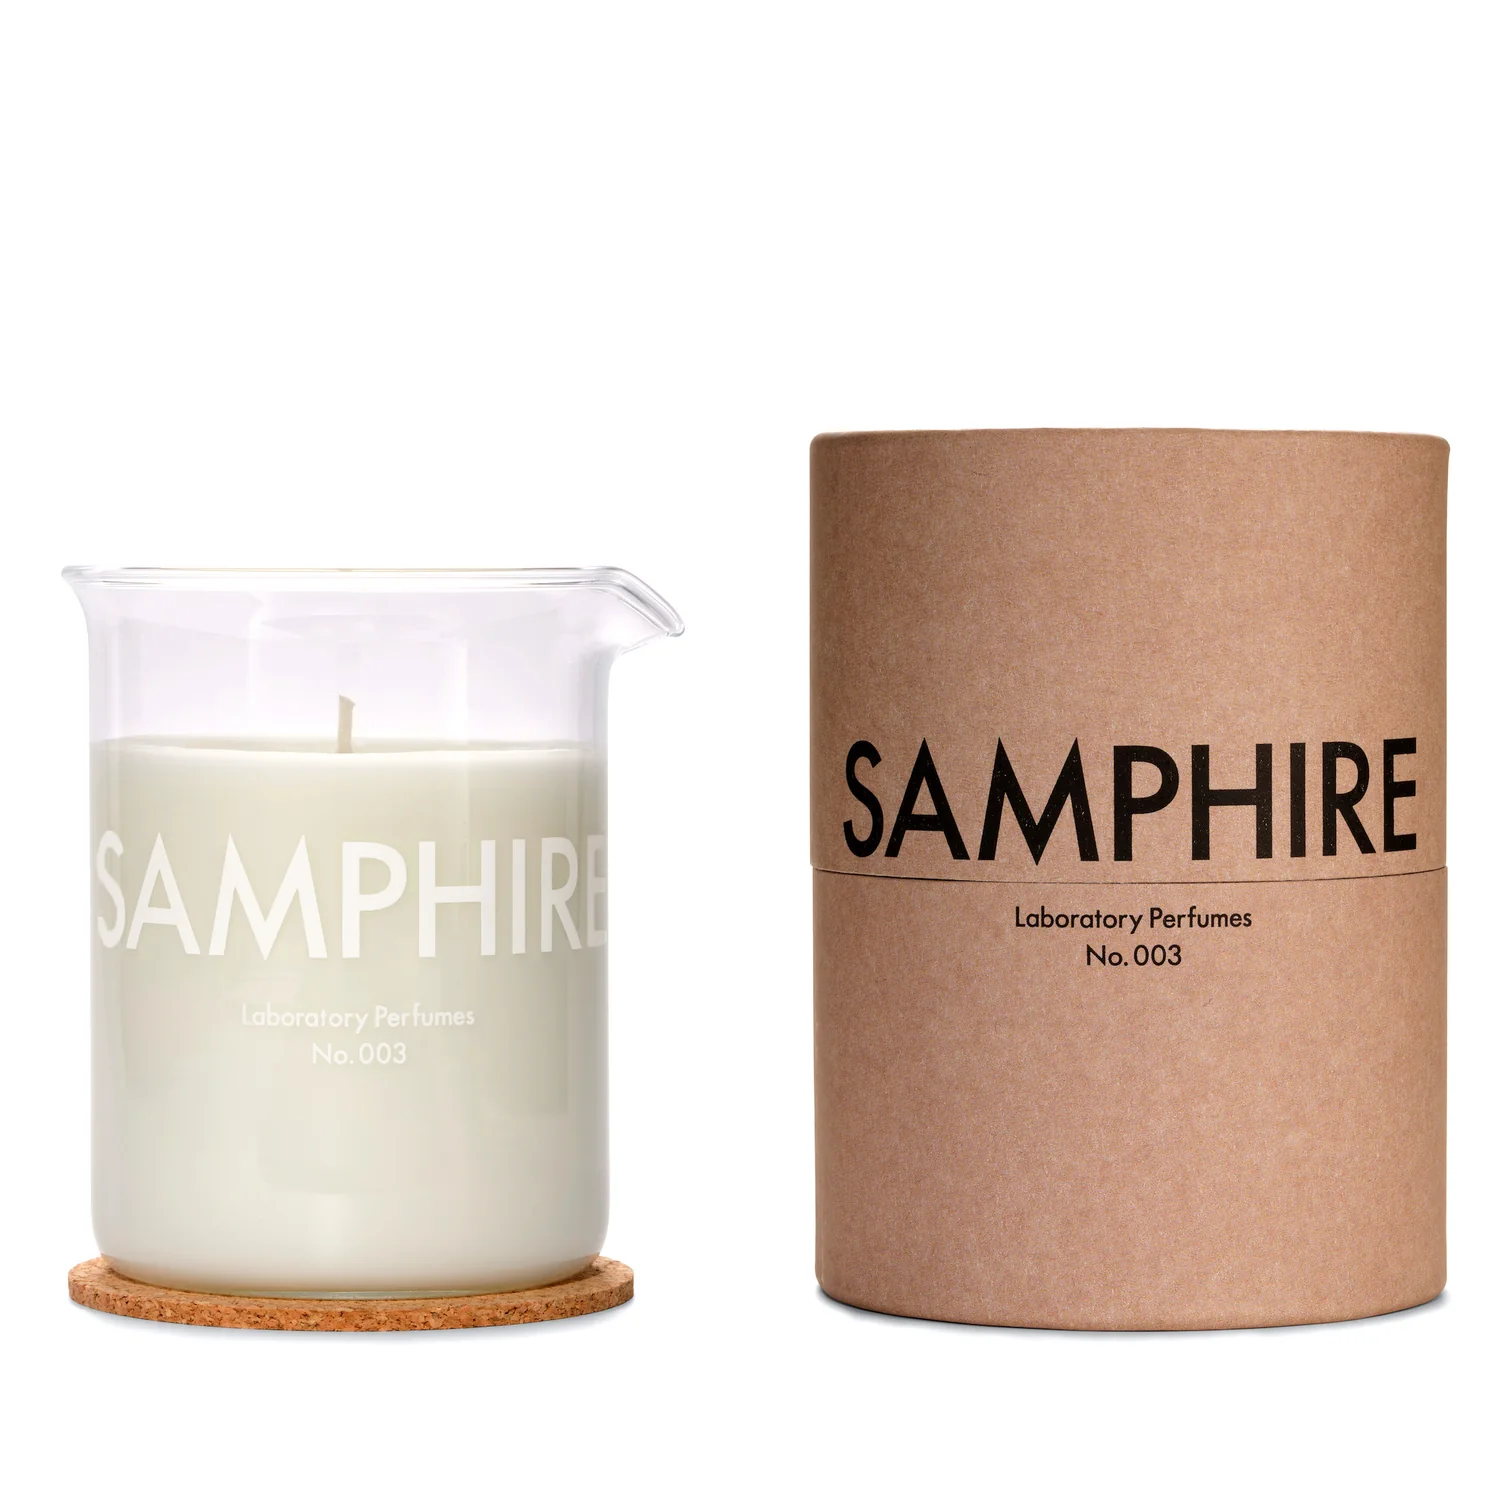 Laboratory Perfumes  200g Samphire Candle 